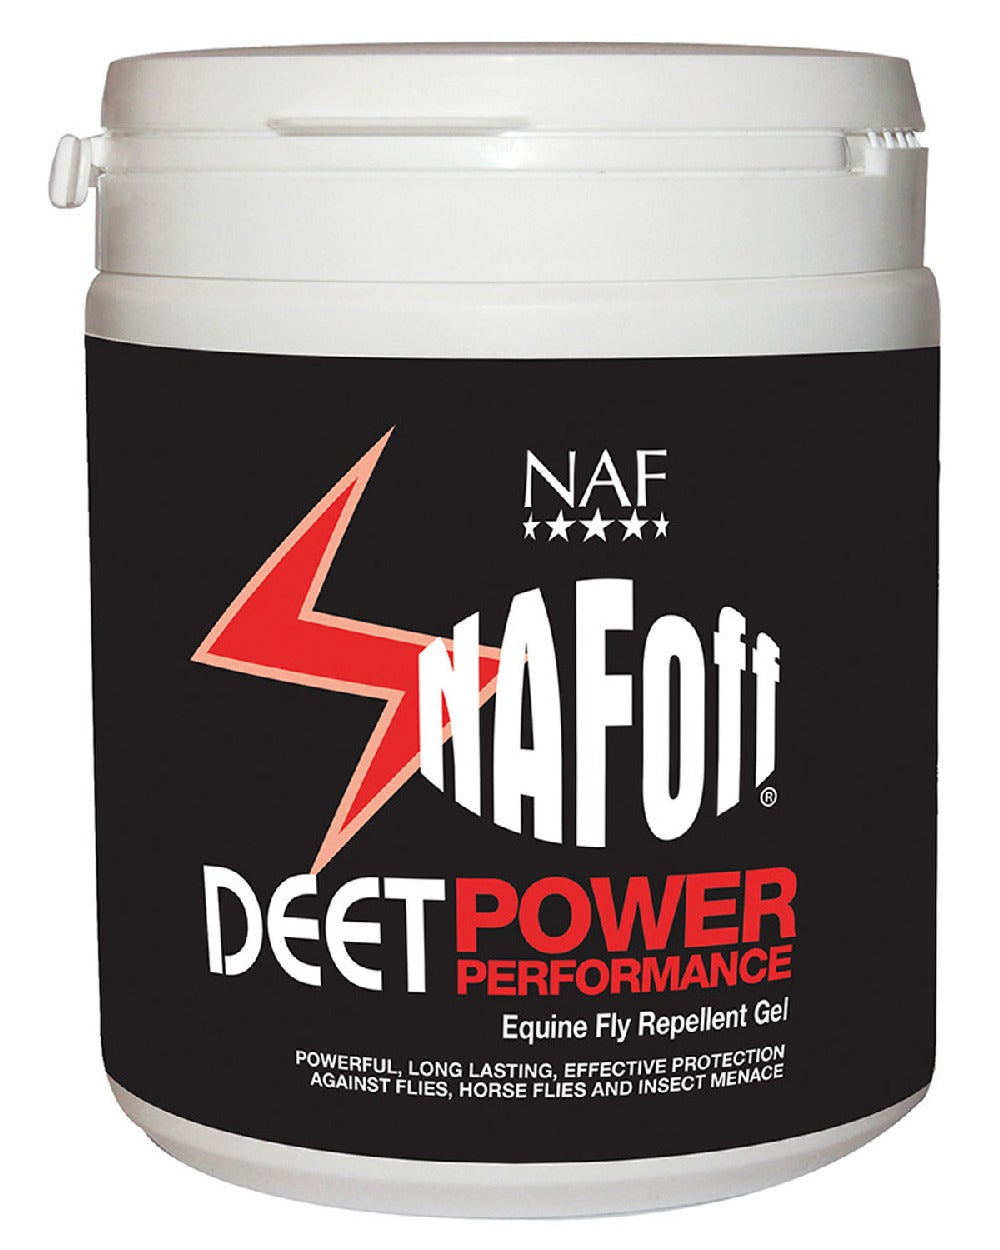 NAF Off Deet Power Performance Gel 750gm on white background